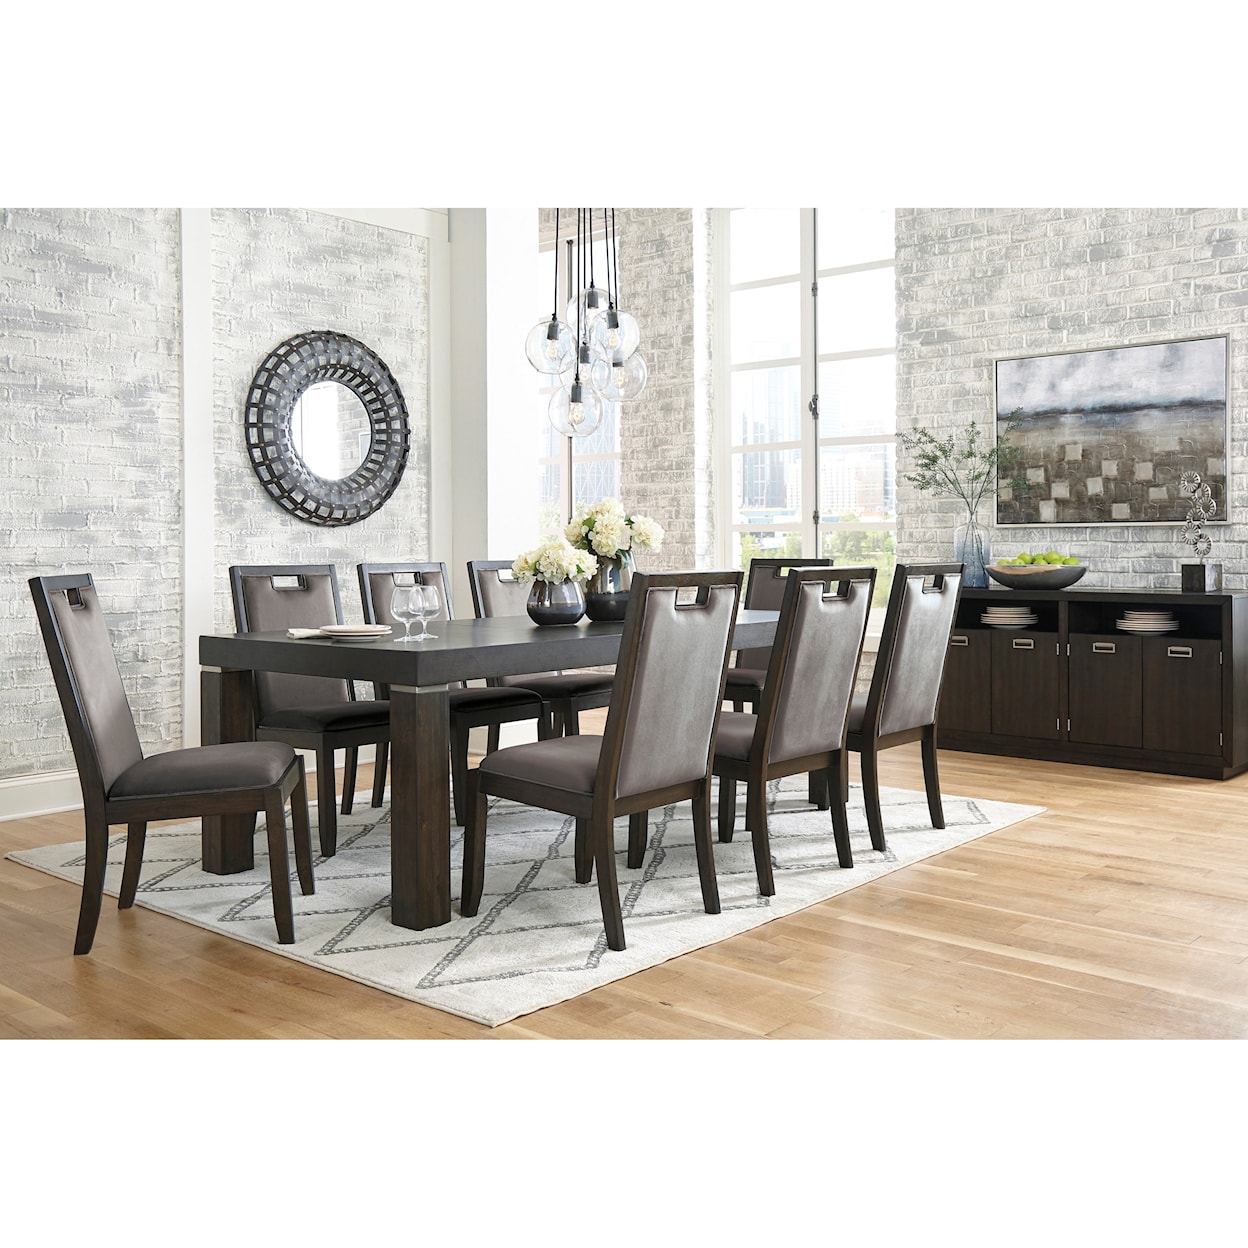 Ashley Furniture Signature Design Hyndell Dining Room Group